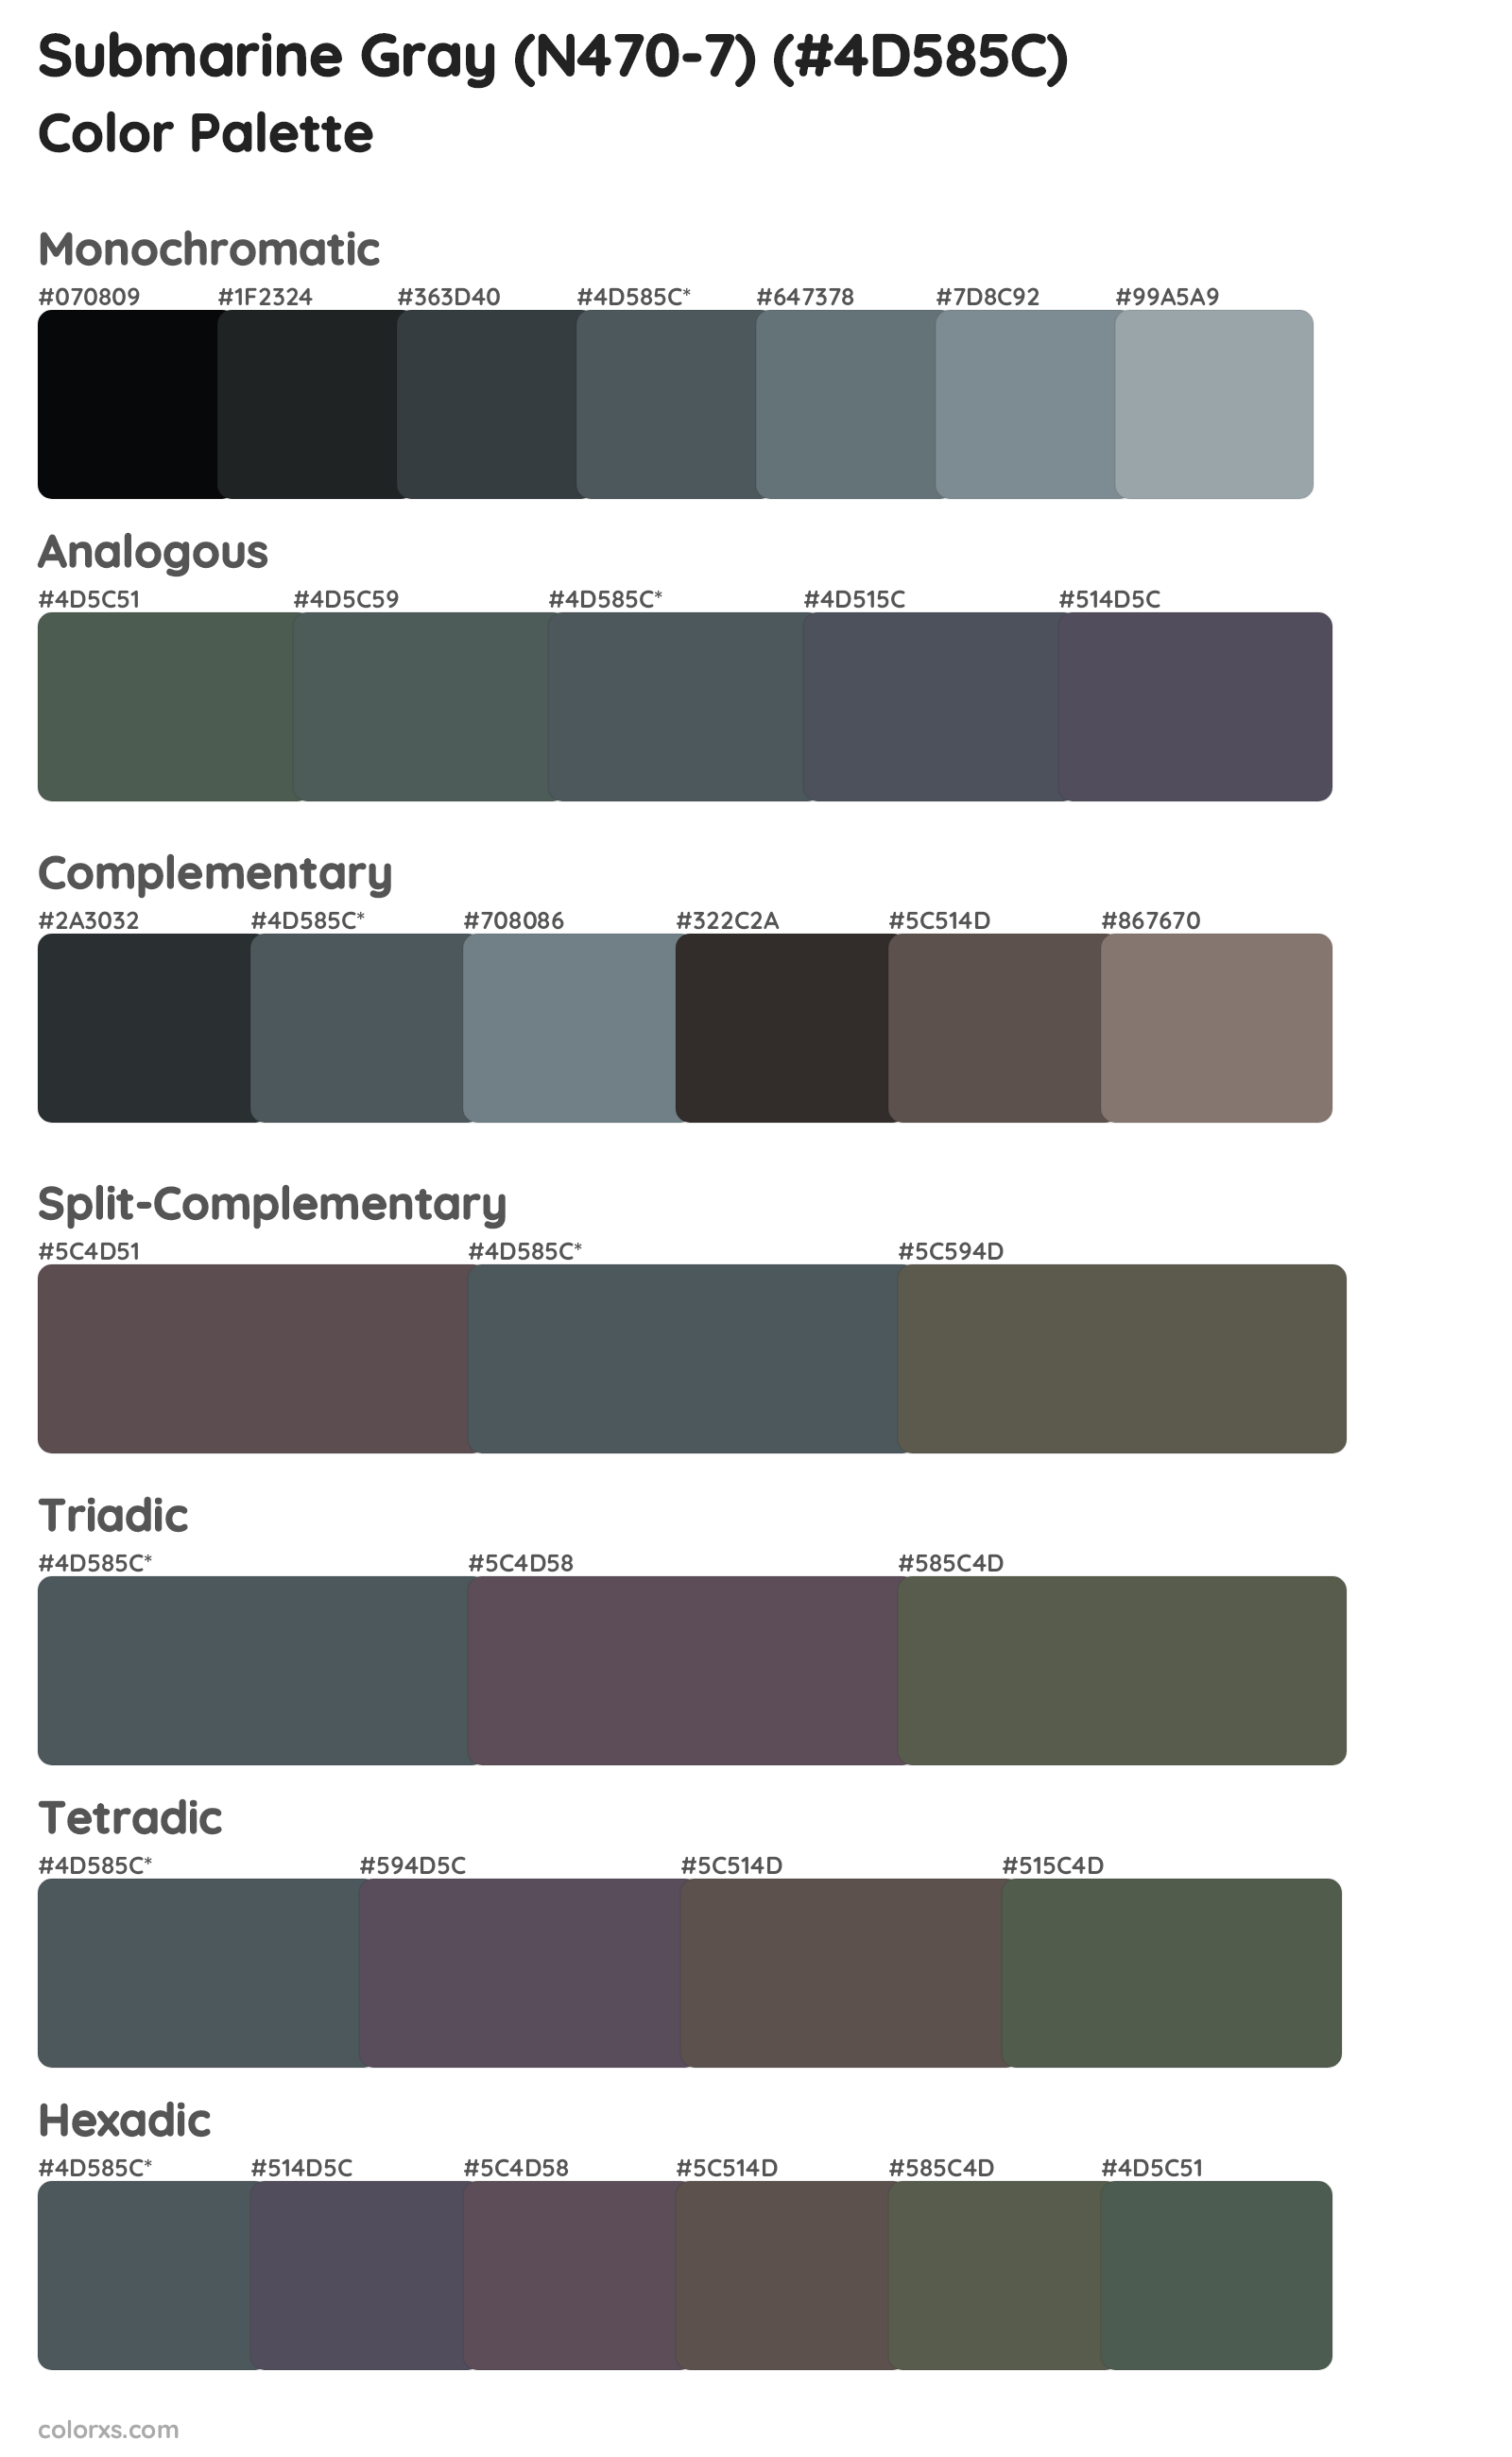 Submarine Gray (N470-7) Color Scheme Palettes